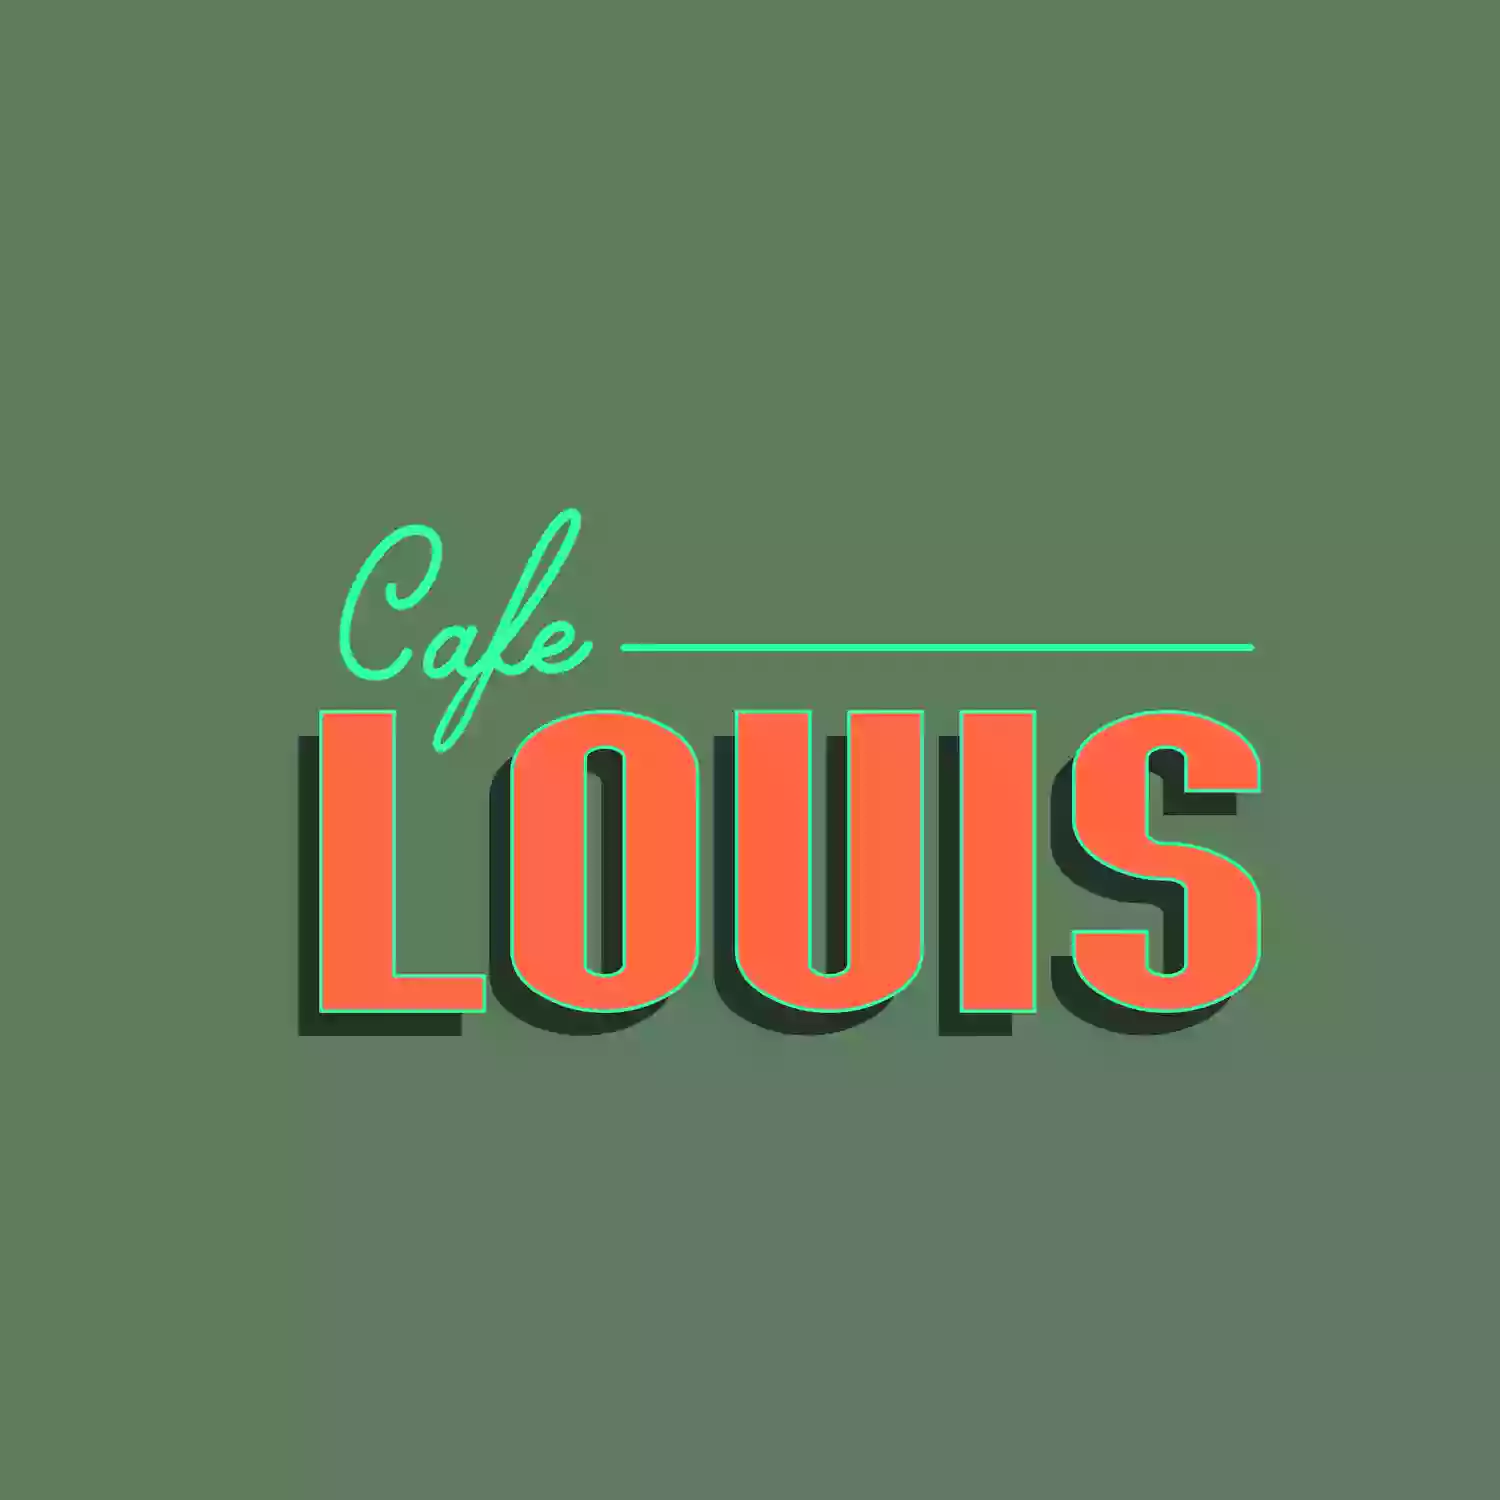 Cafe Louis